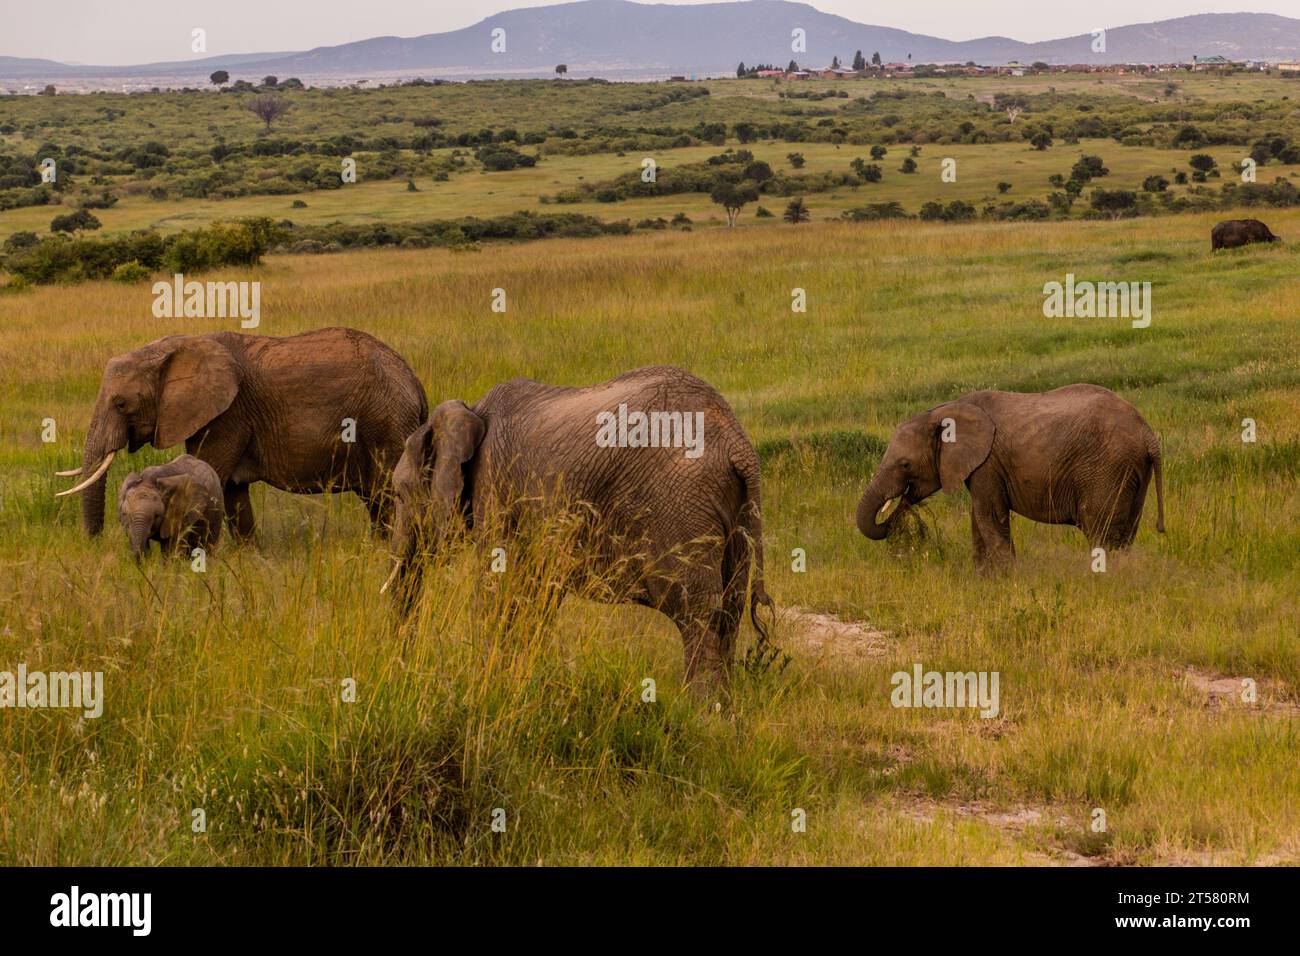 Elephants in Masai Mara National Reserve, Kenya Stock Photo